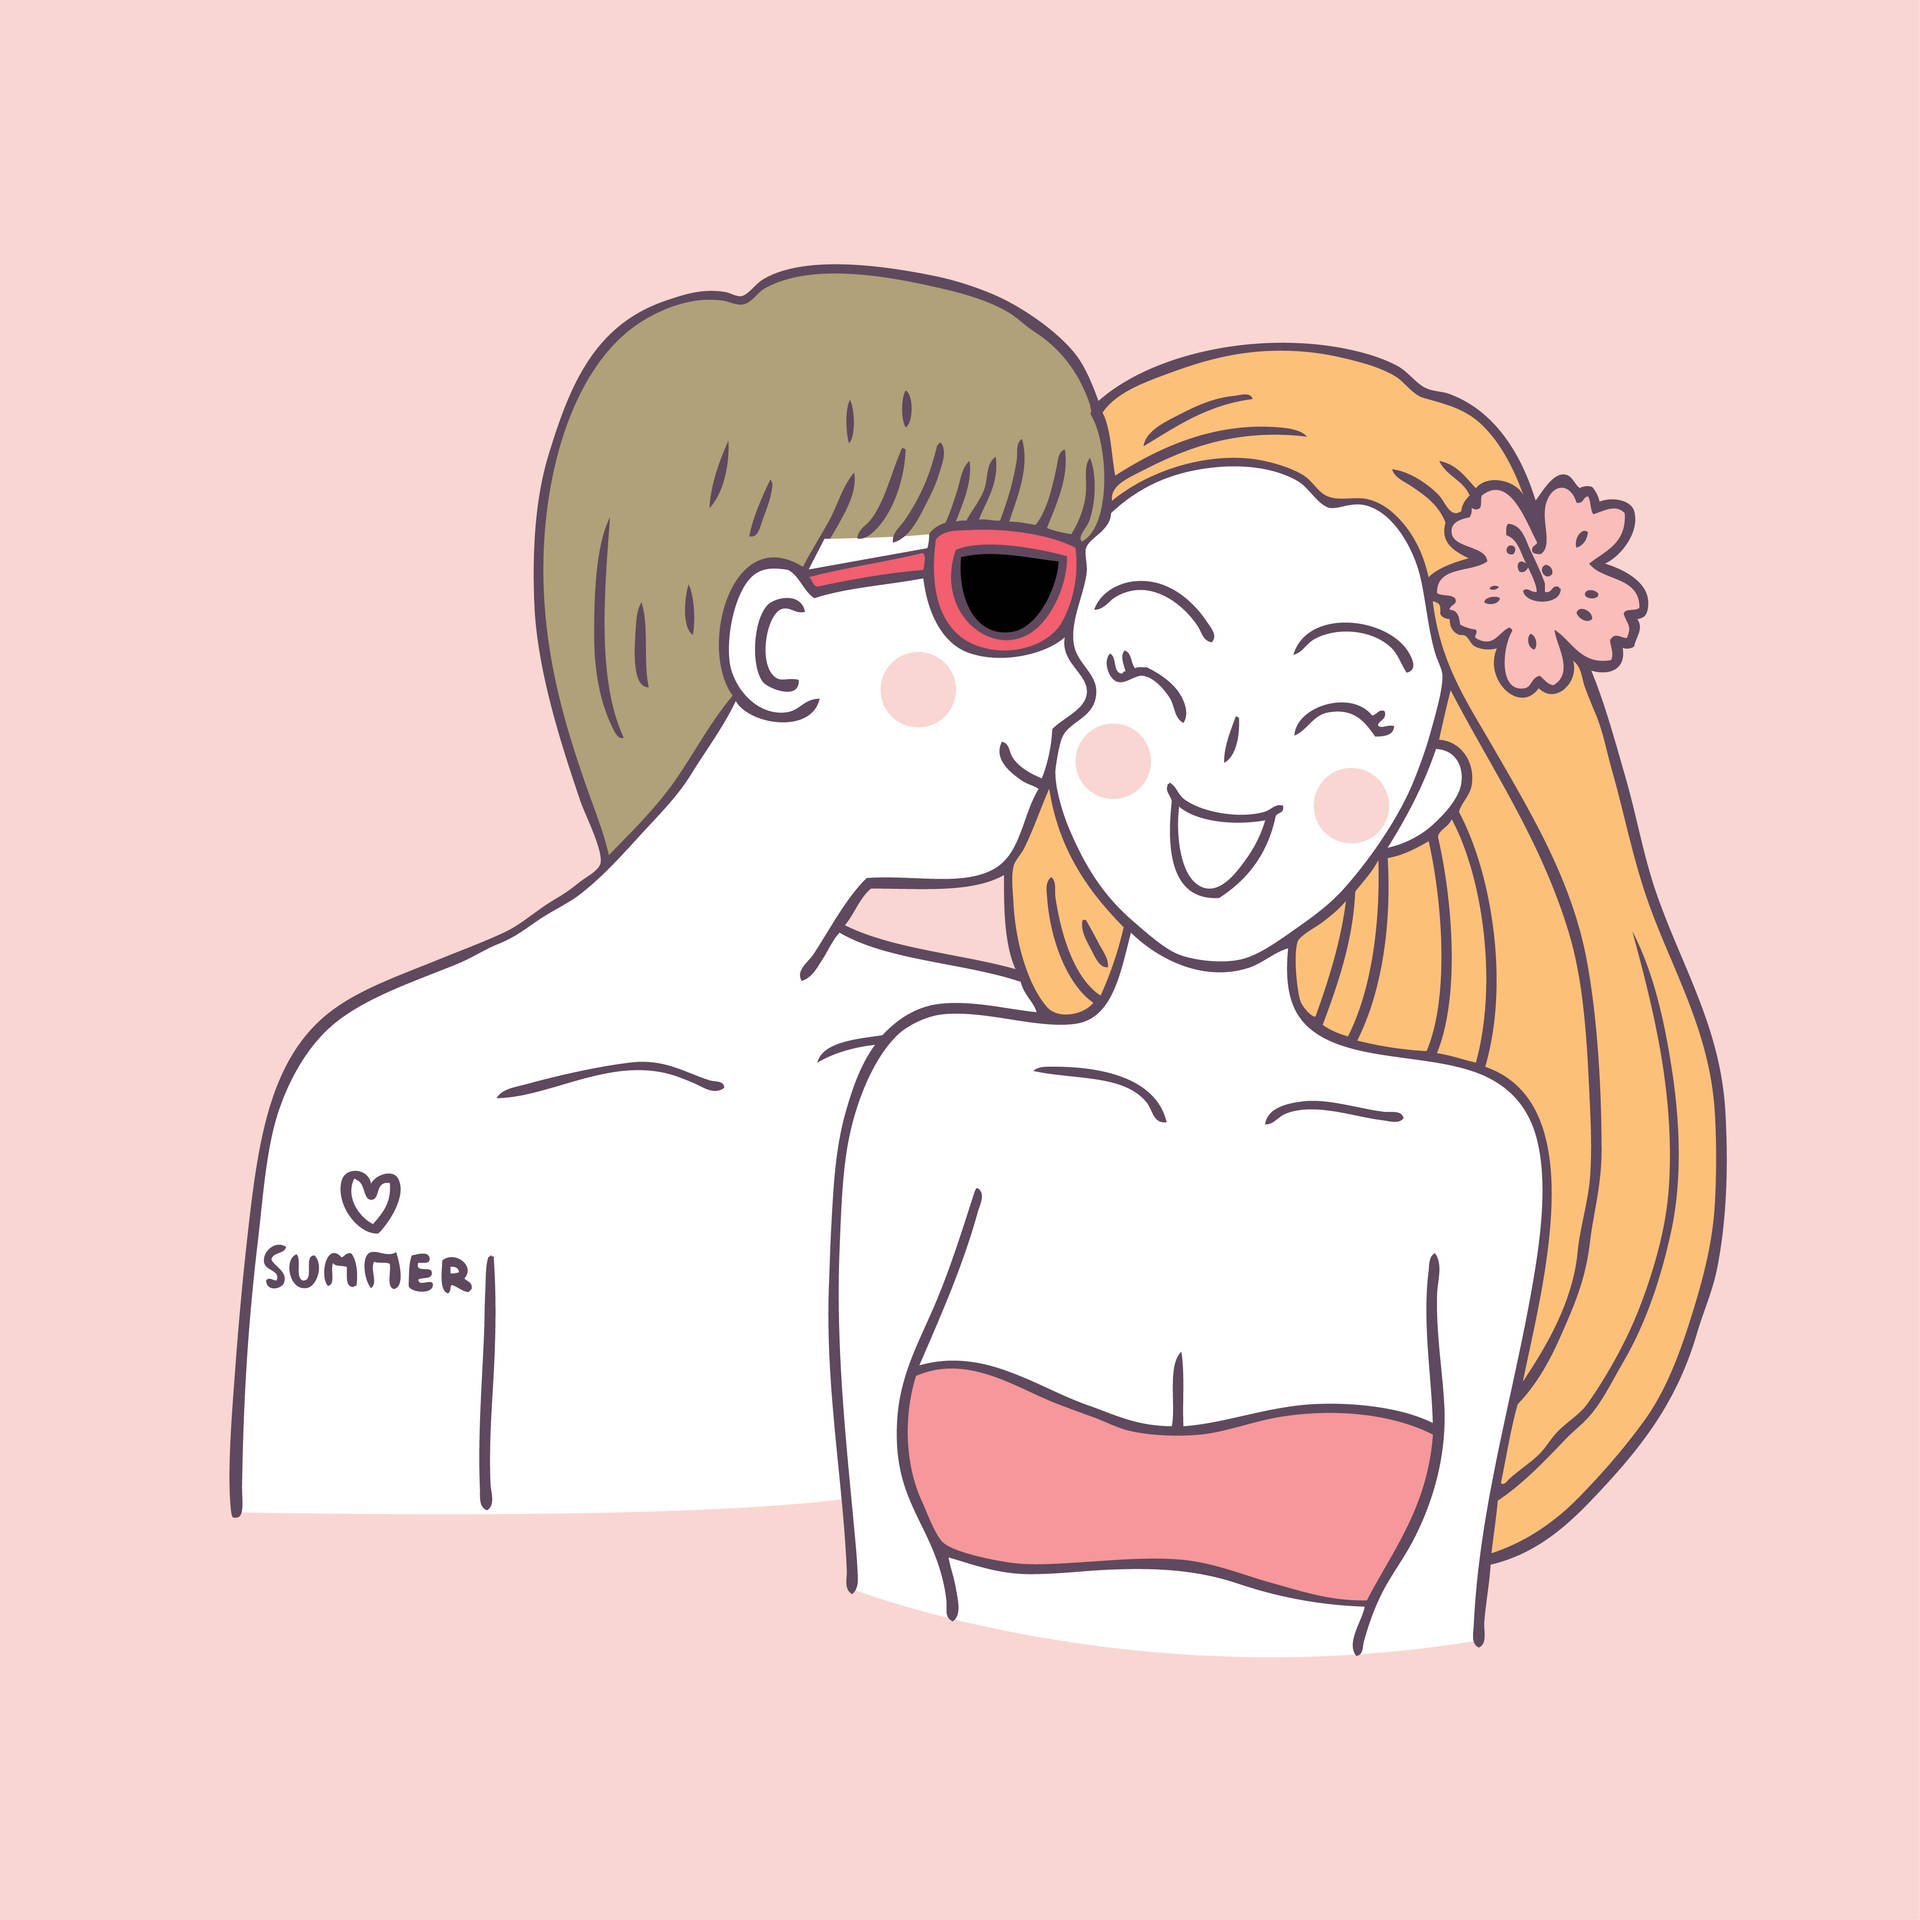 Free Cute Couple Cartoon Wallpaper Downloads, [100+] Cute Couple Cartoon  Wallpapers for FREE 